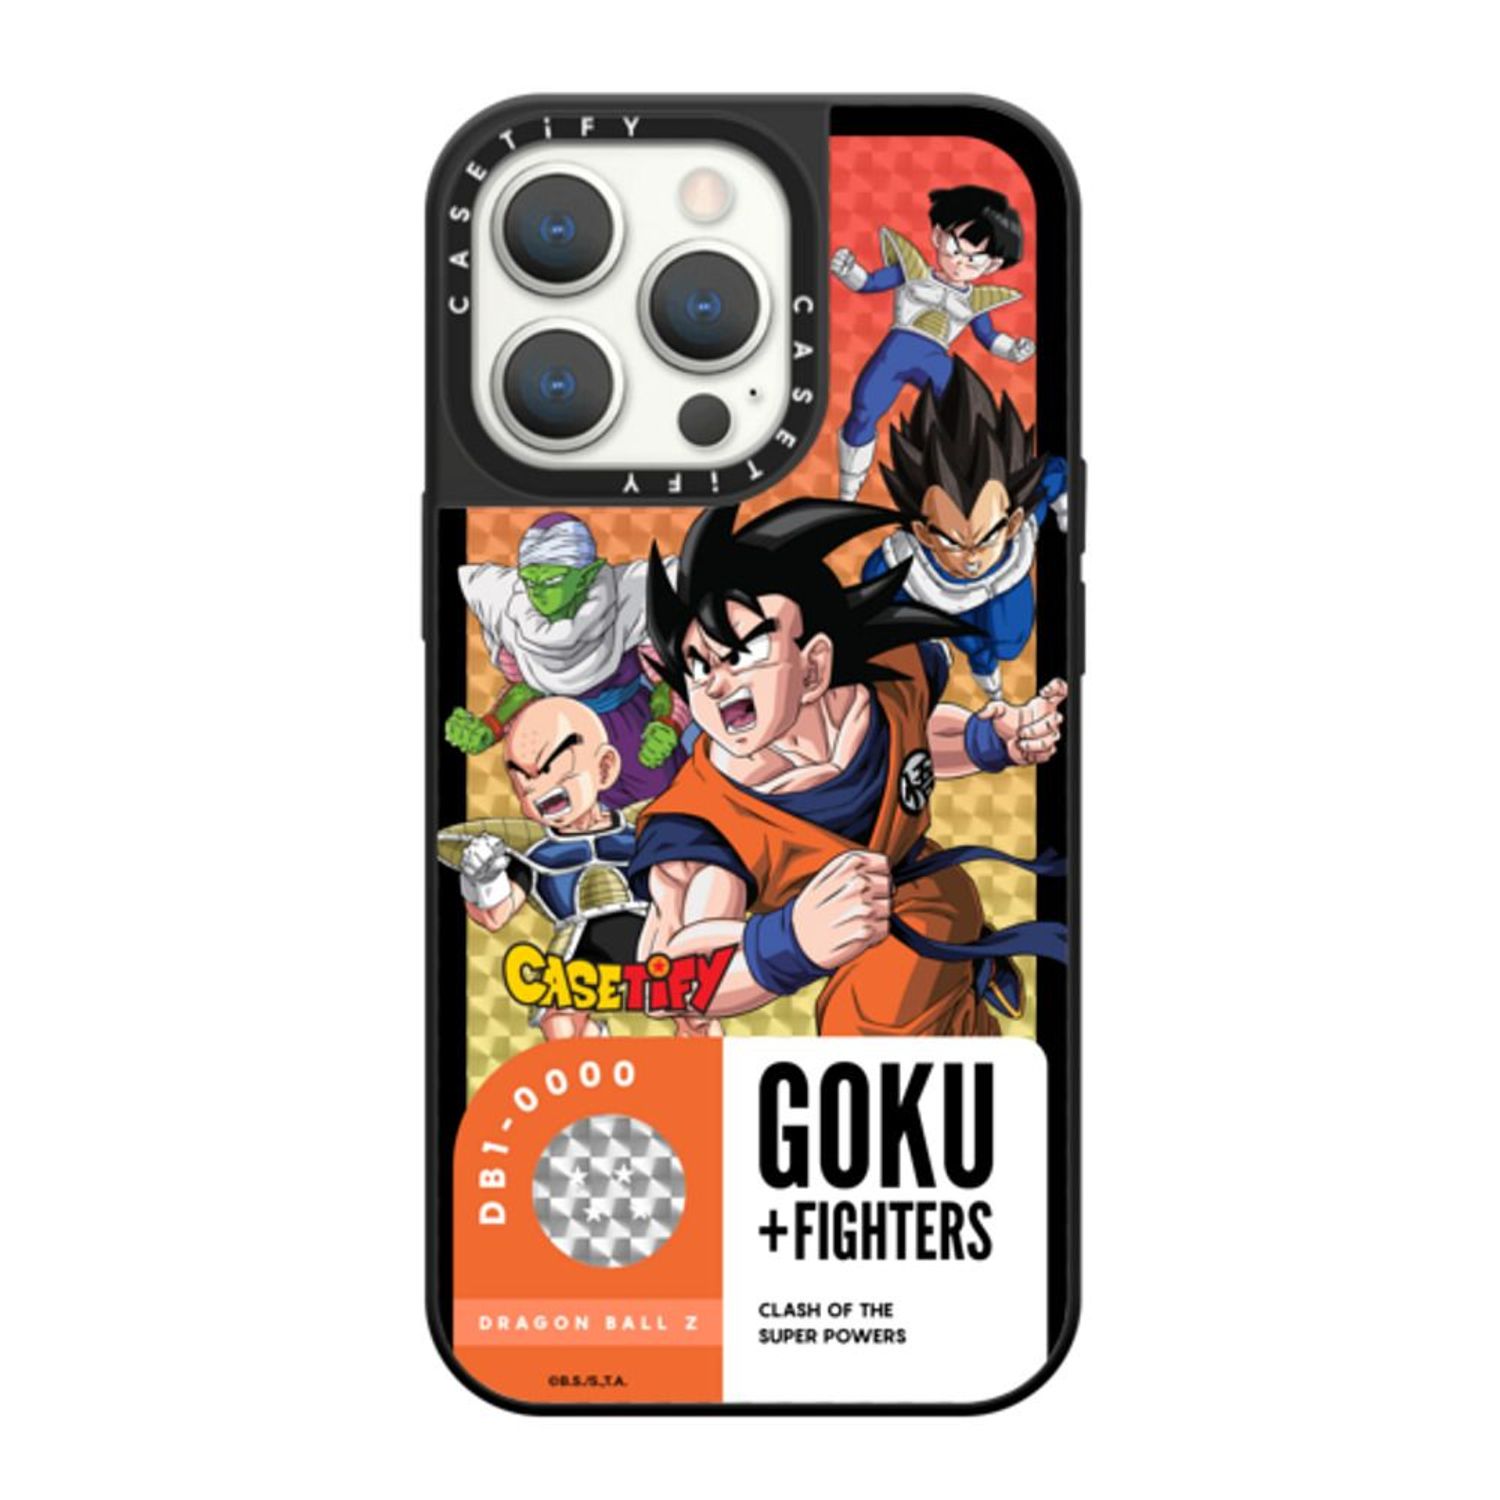 Mirror Case ScreenShop Para iPhone 11 Dragon Ball Z Goku + Fighters  Casetify - Oechsle